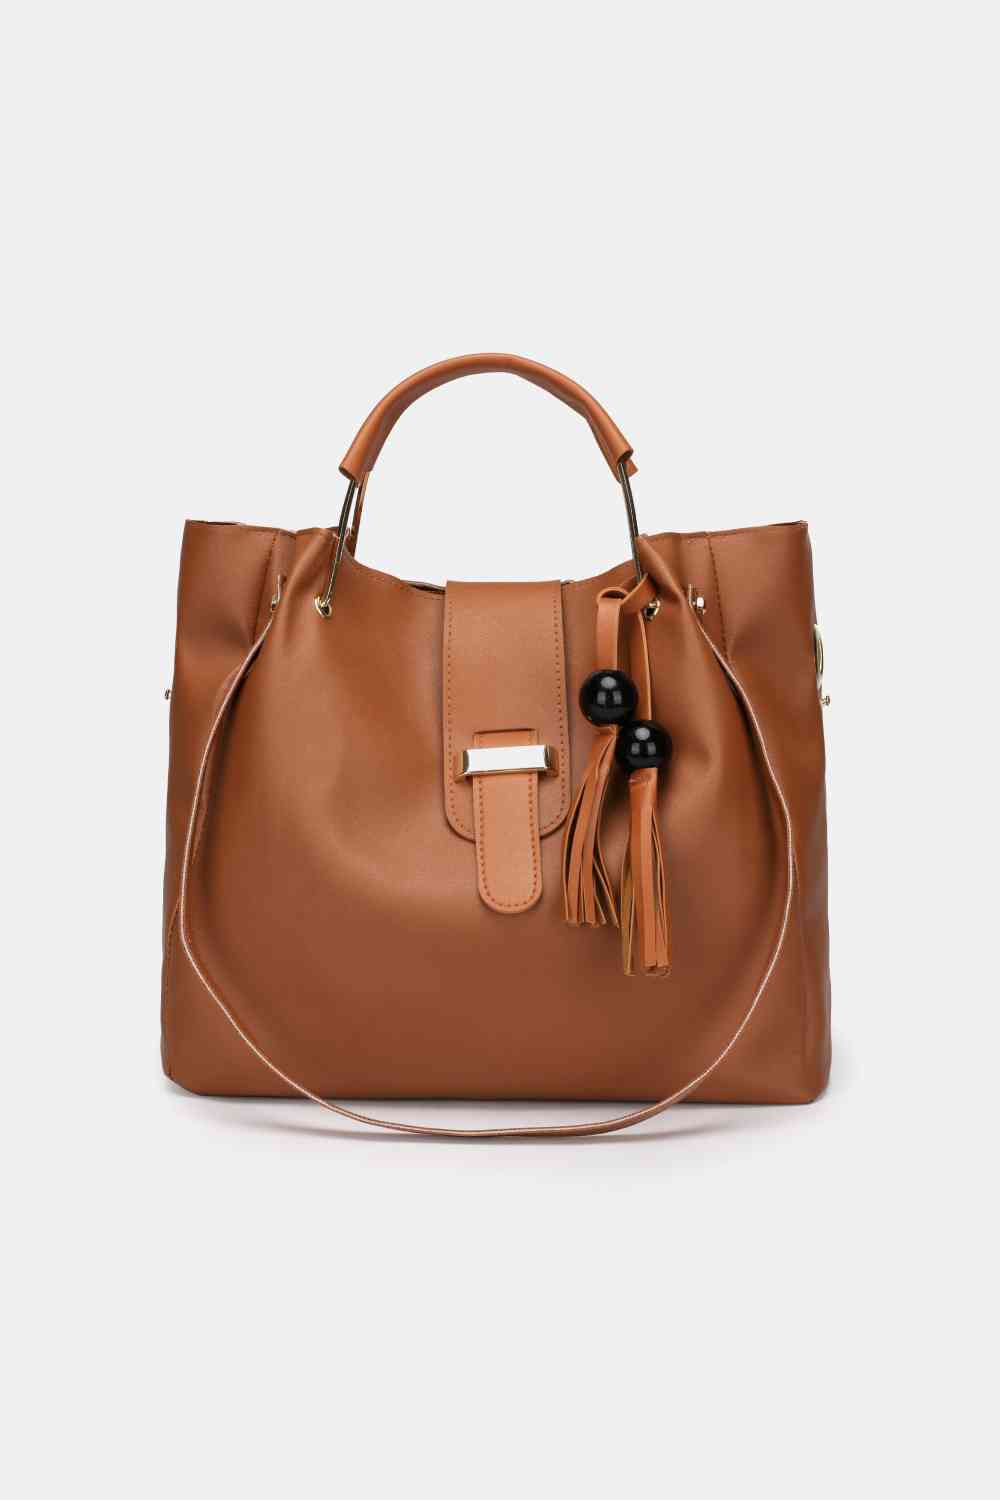 2-Piece PU Leather Bag Set - Handbag - FITGGINS